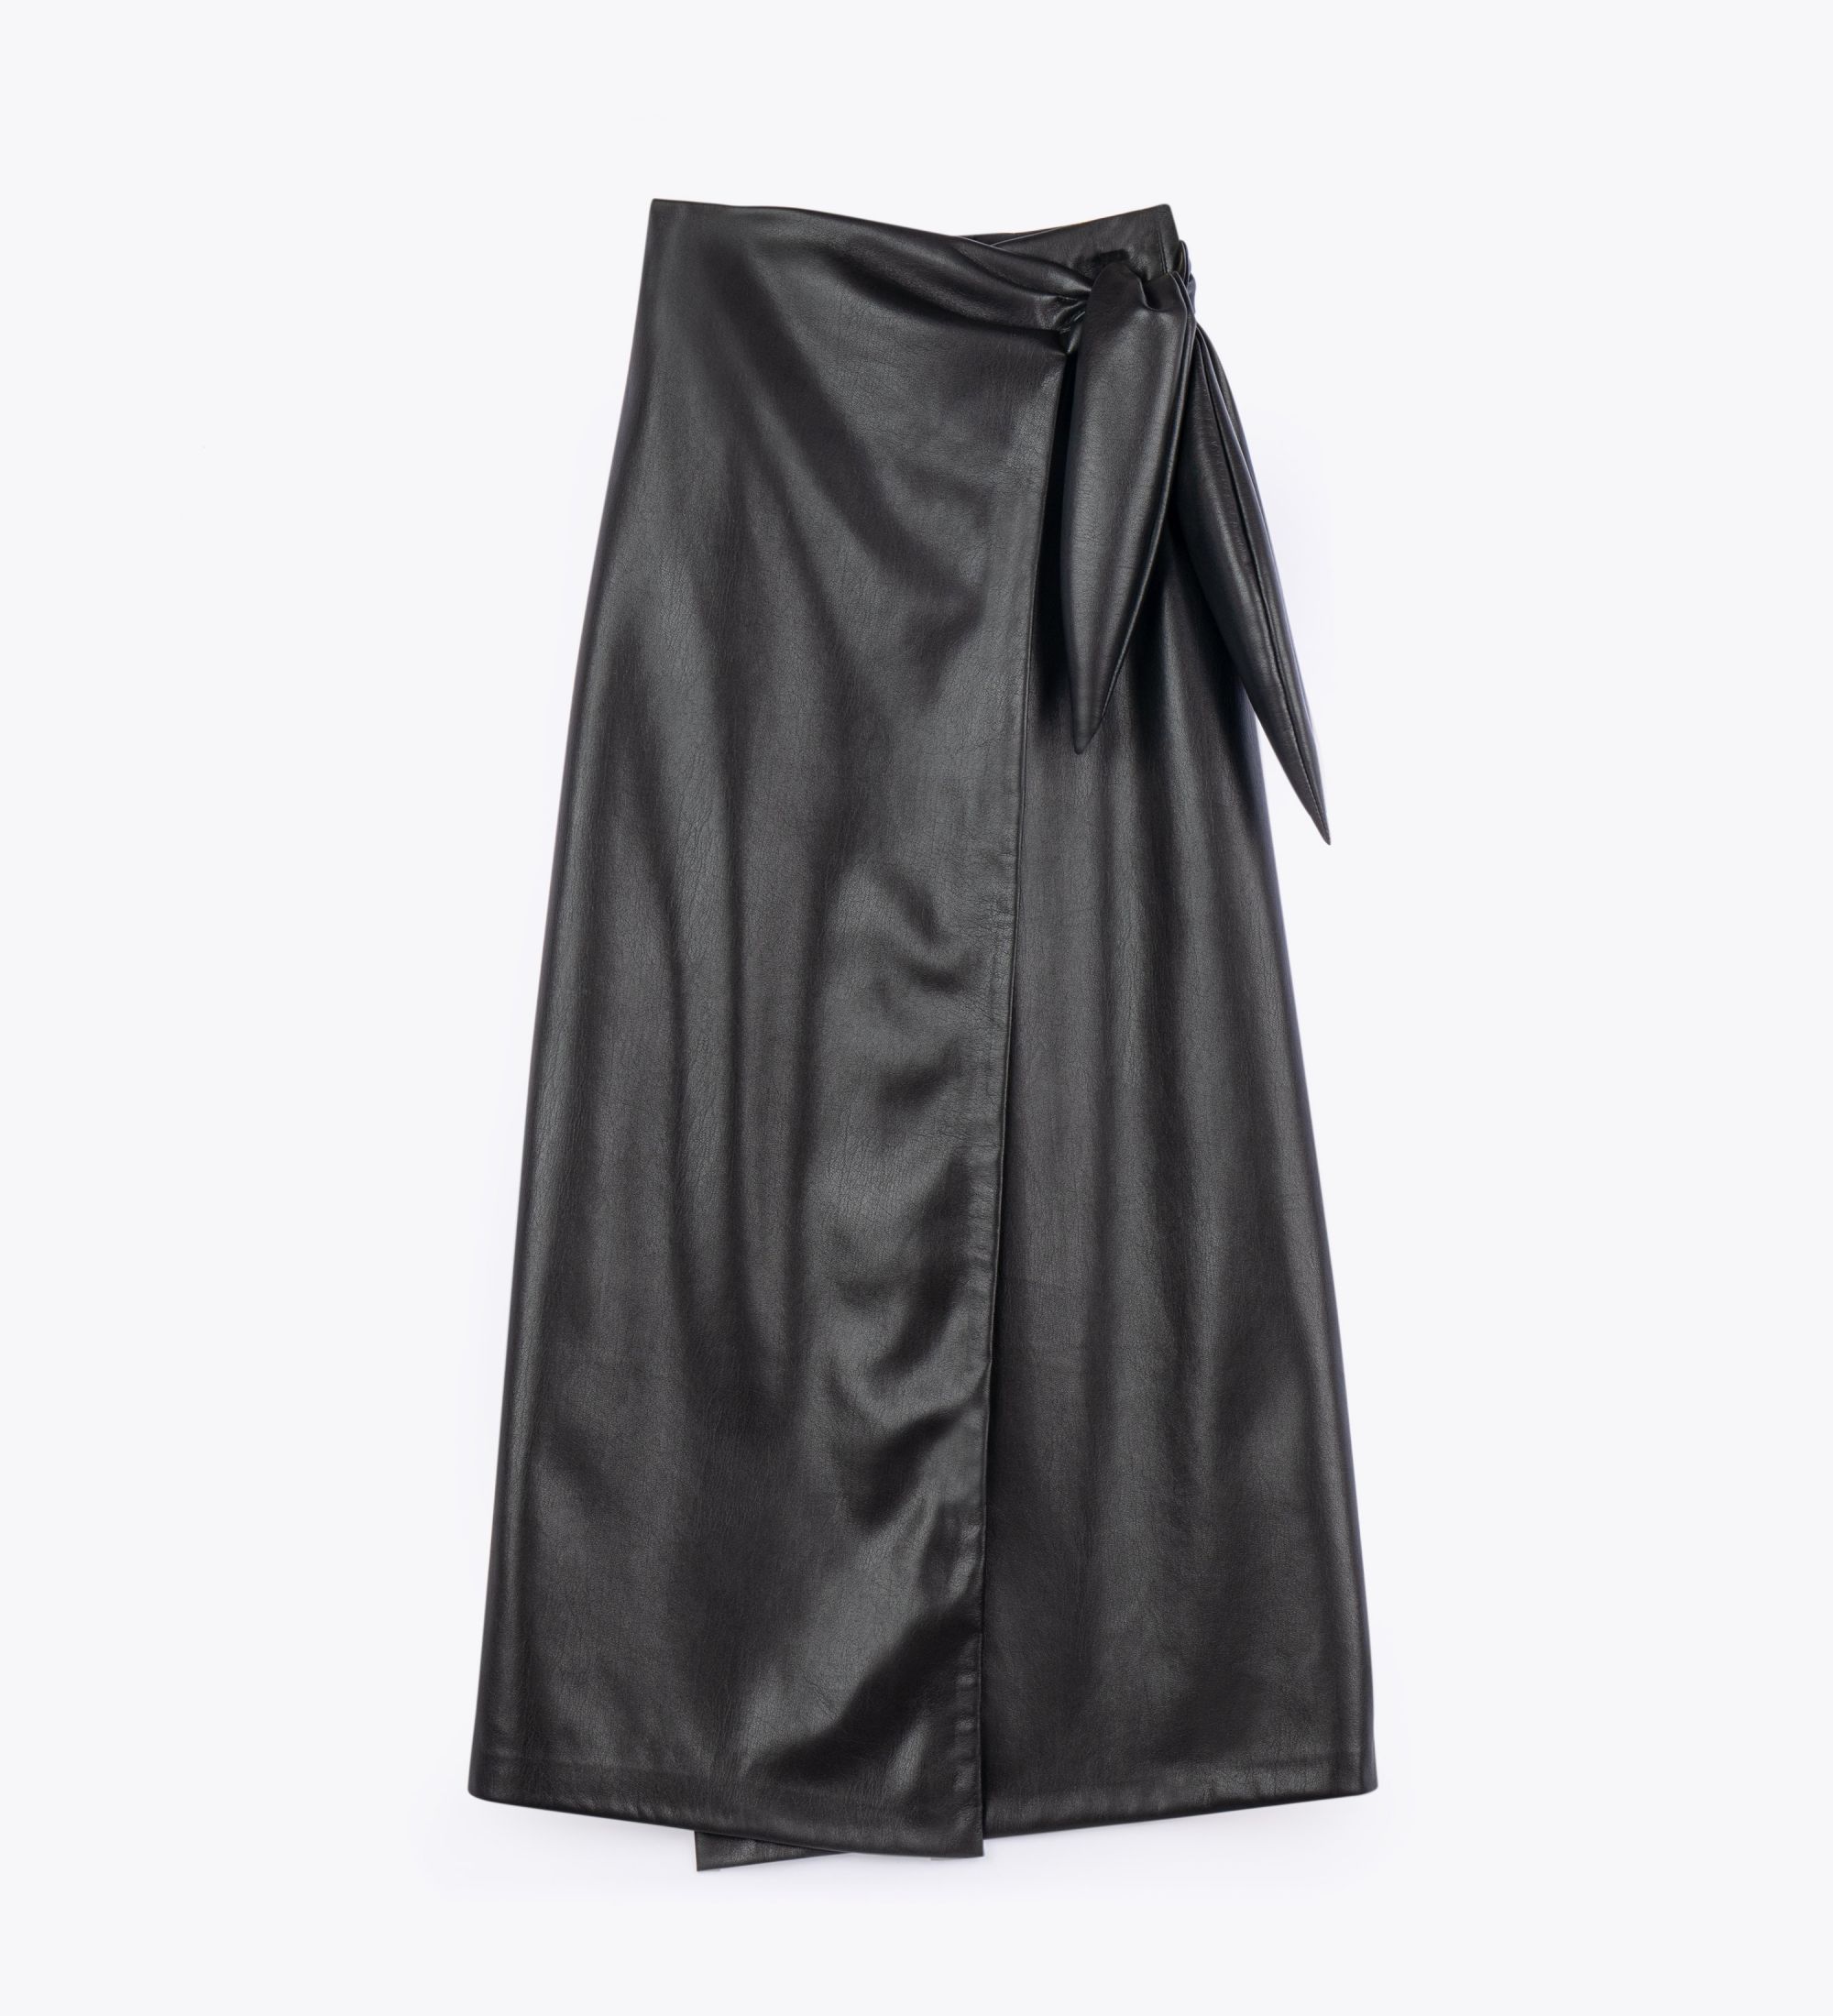 LEEZ Women Leather Skirt - Black